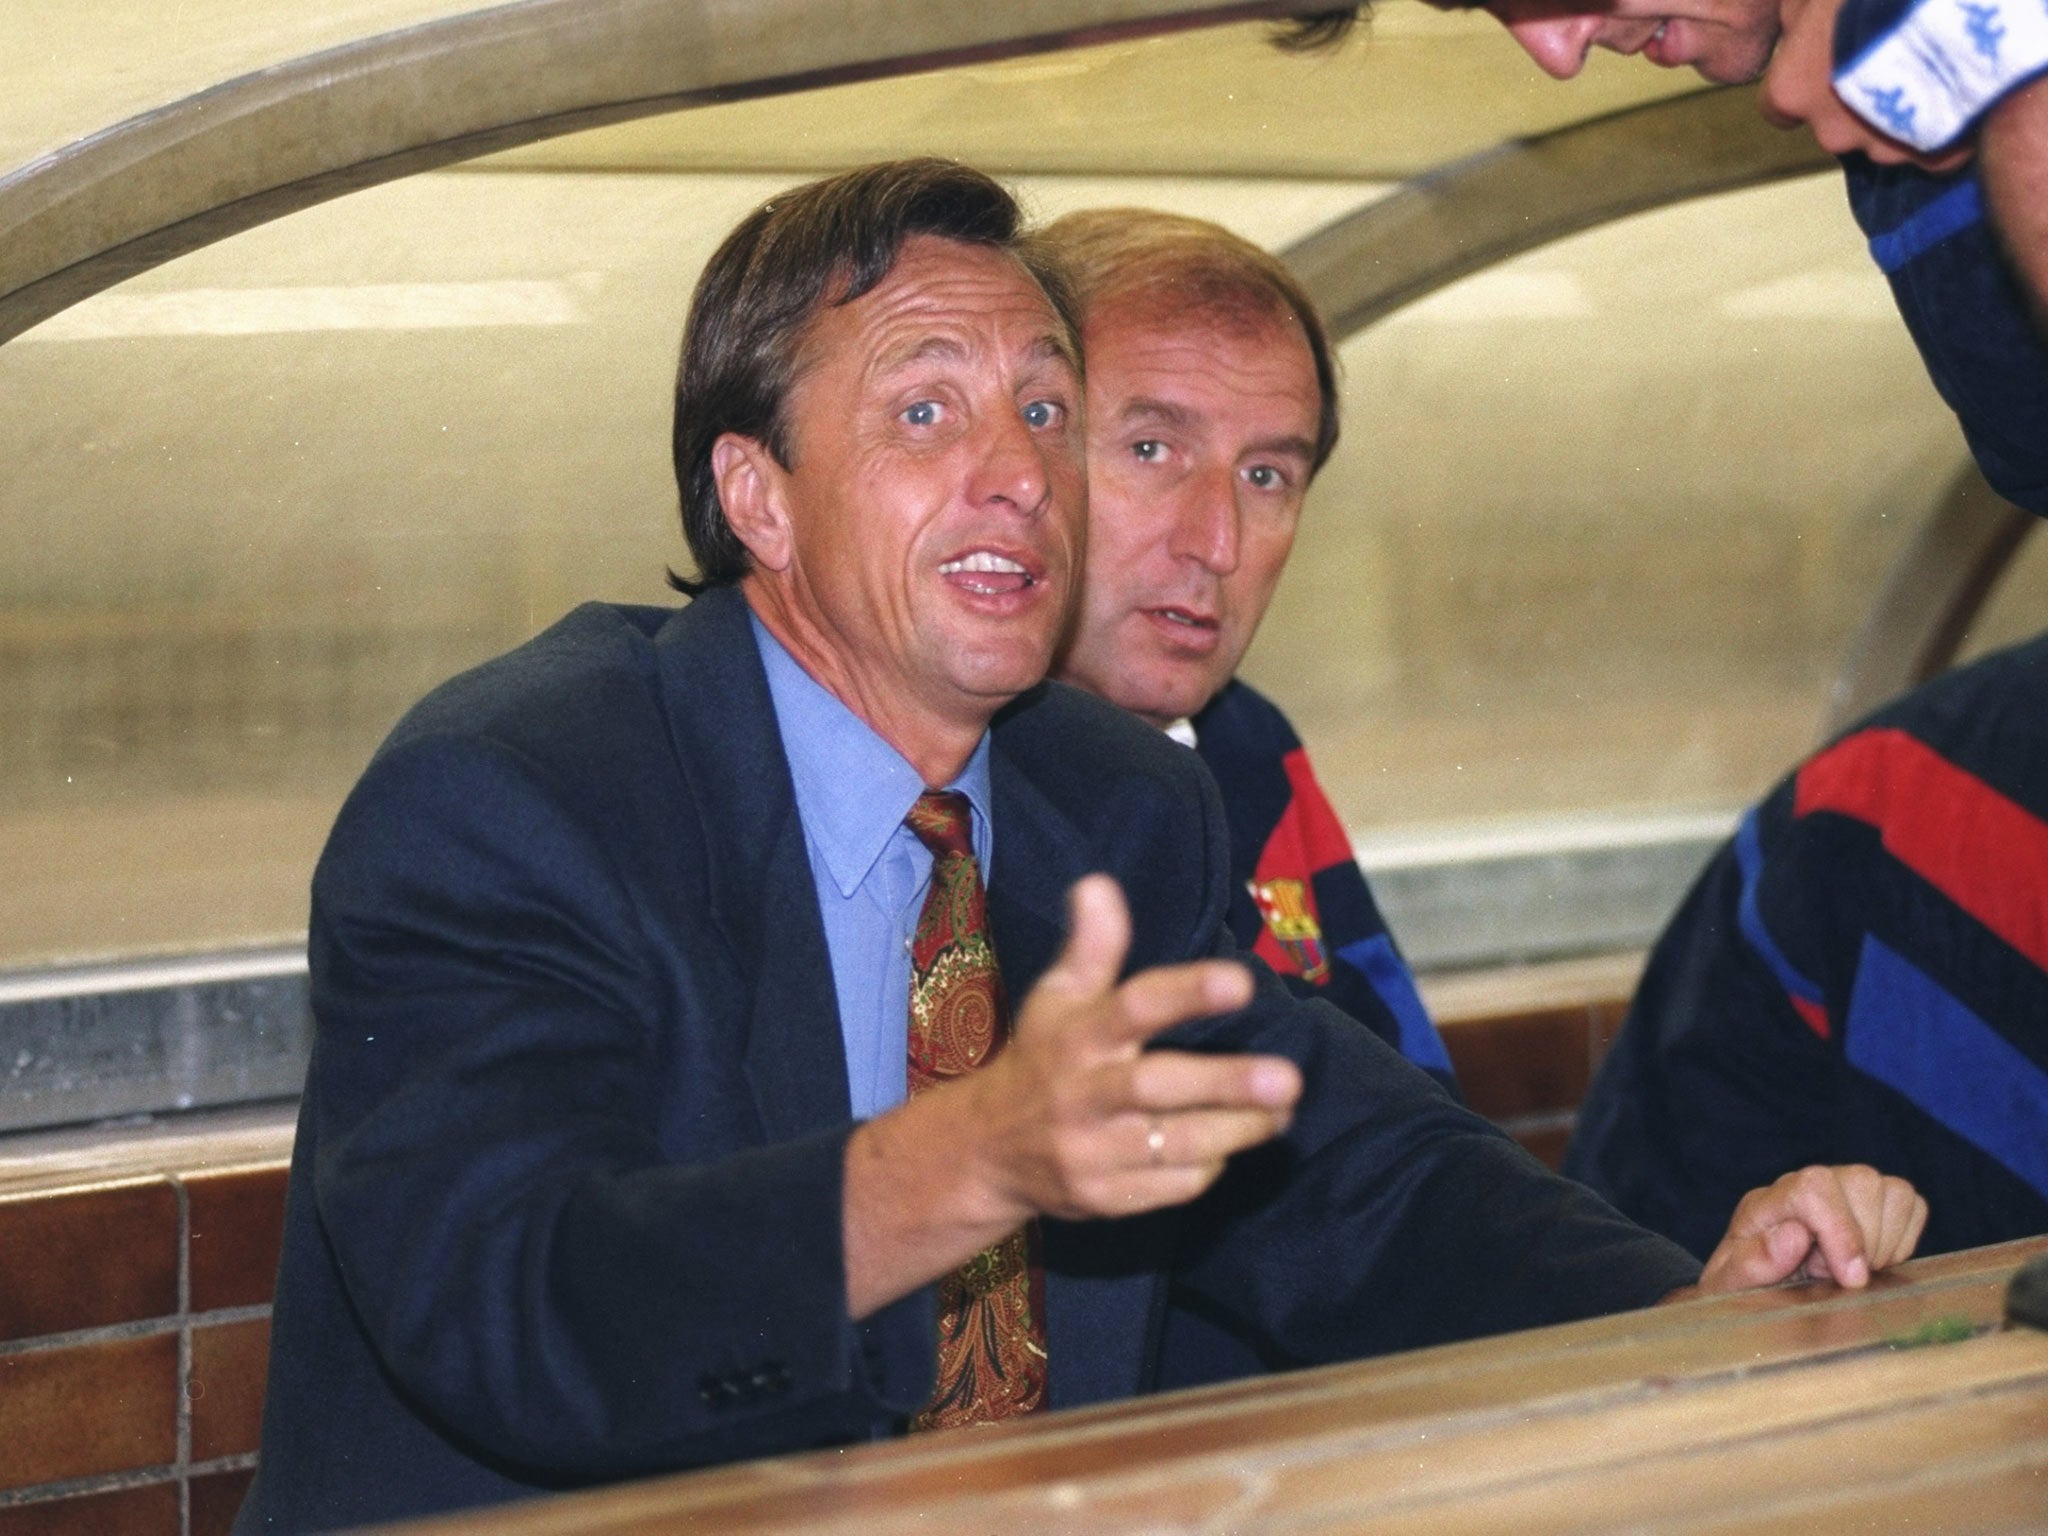 Johan Cruyff’s footballing philosophy is upheld to this day at Barcelona